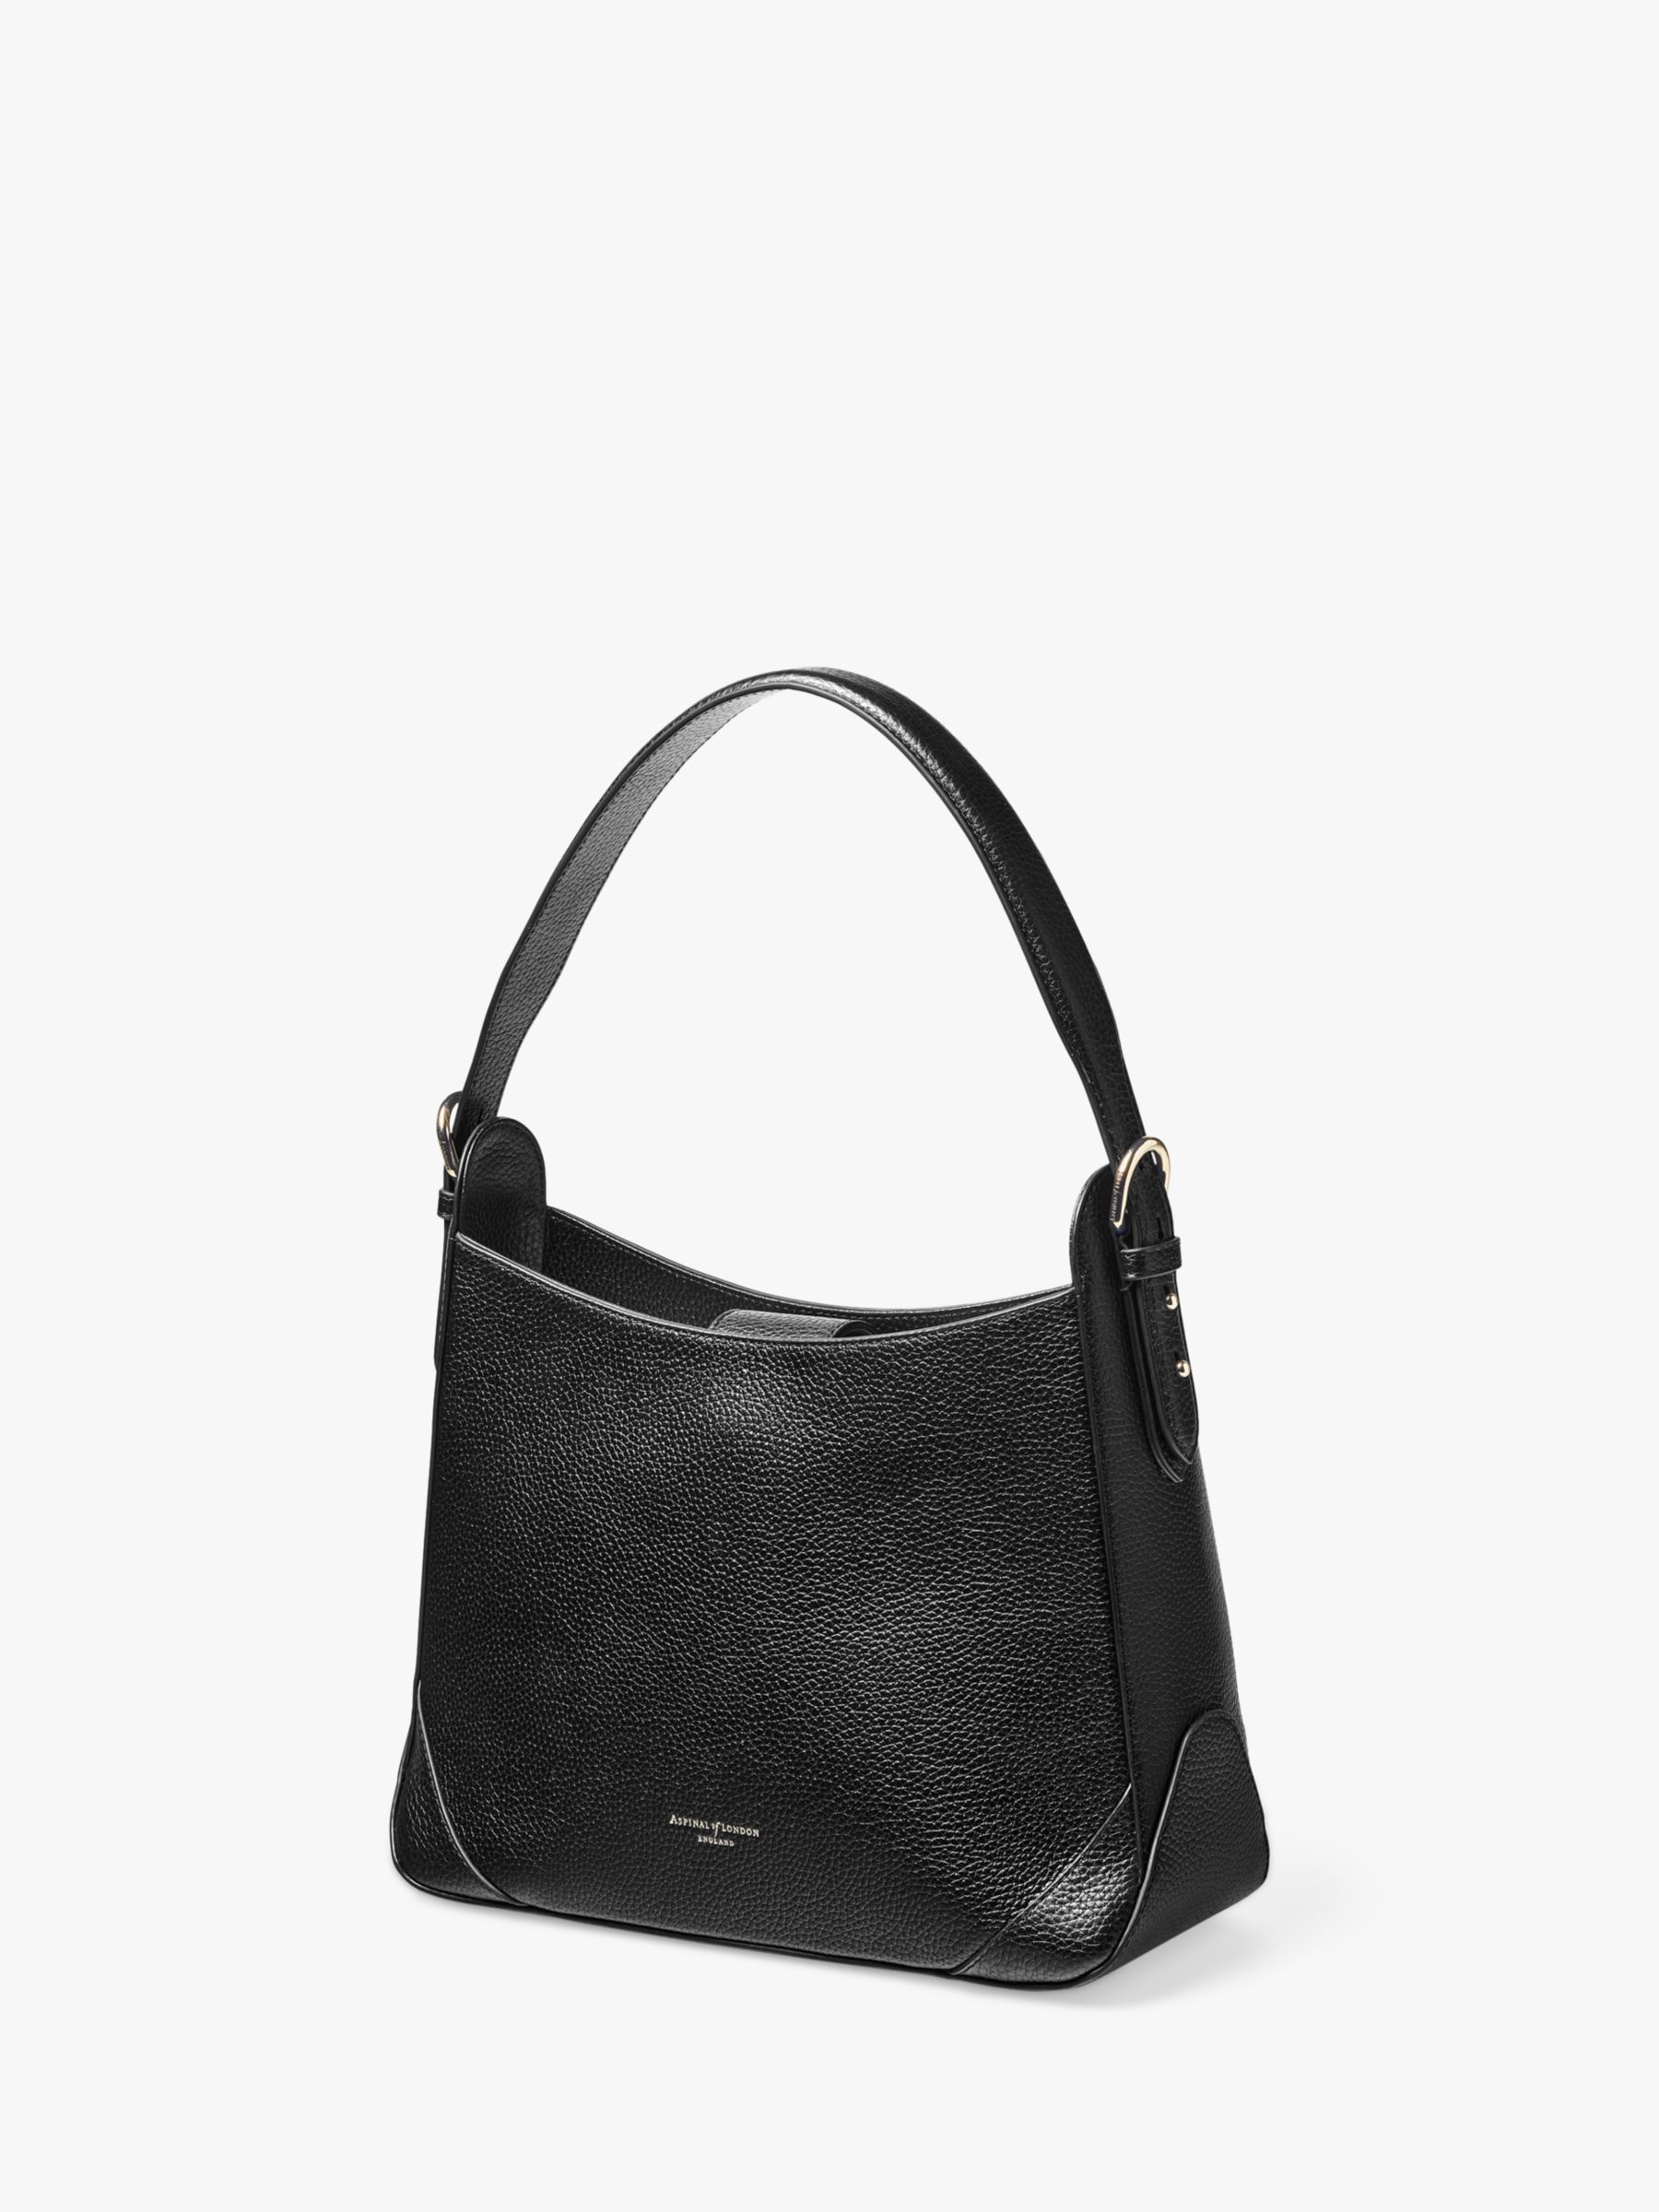 Buy Aspinal of London Full Grain Leather Hobo Bag Online at johnlewis.com